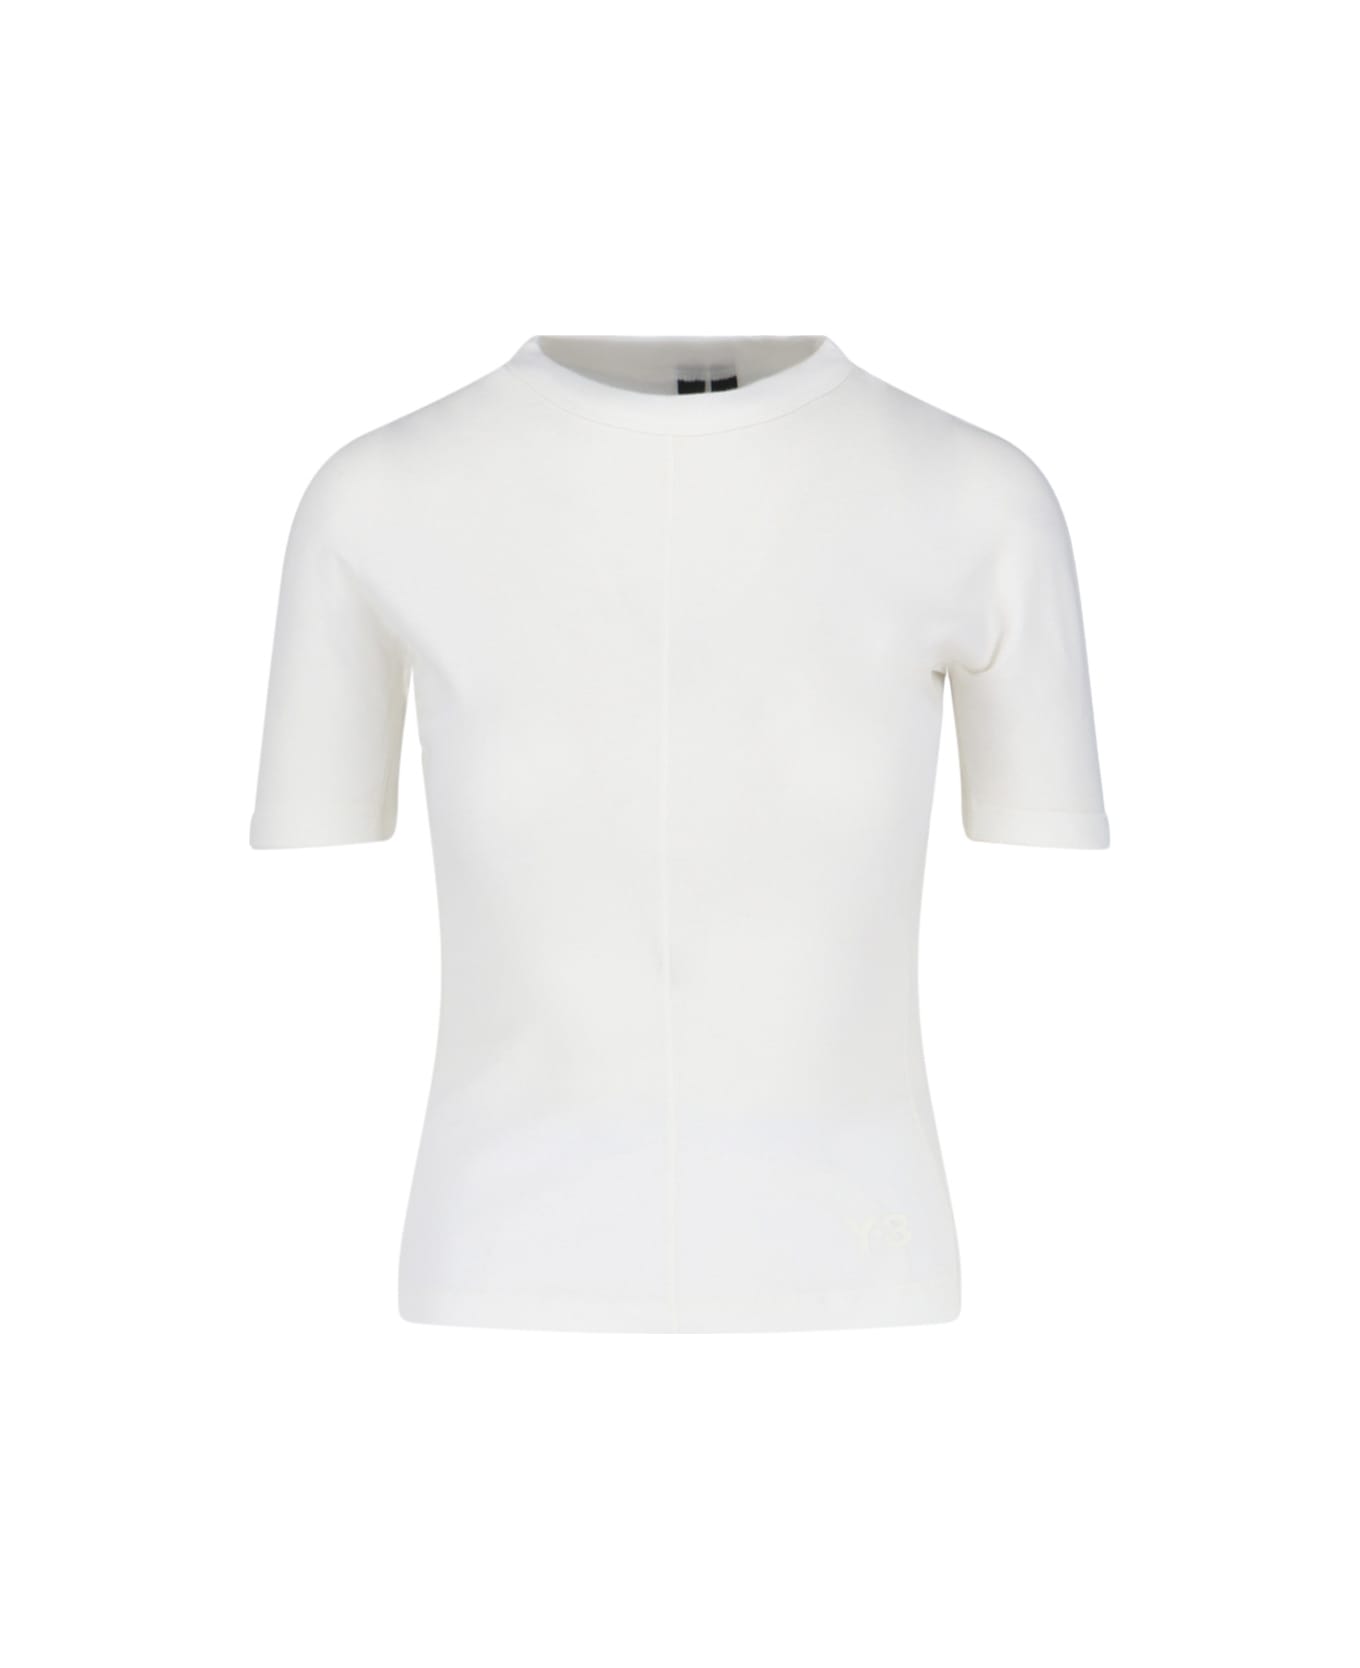 Y-3 Basic T-shirt - OFF WHITE Tシャツ